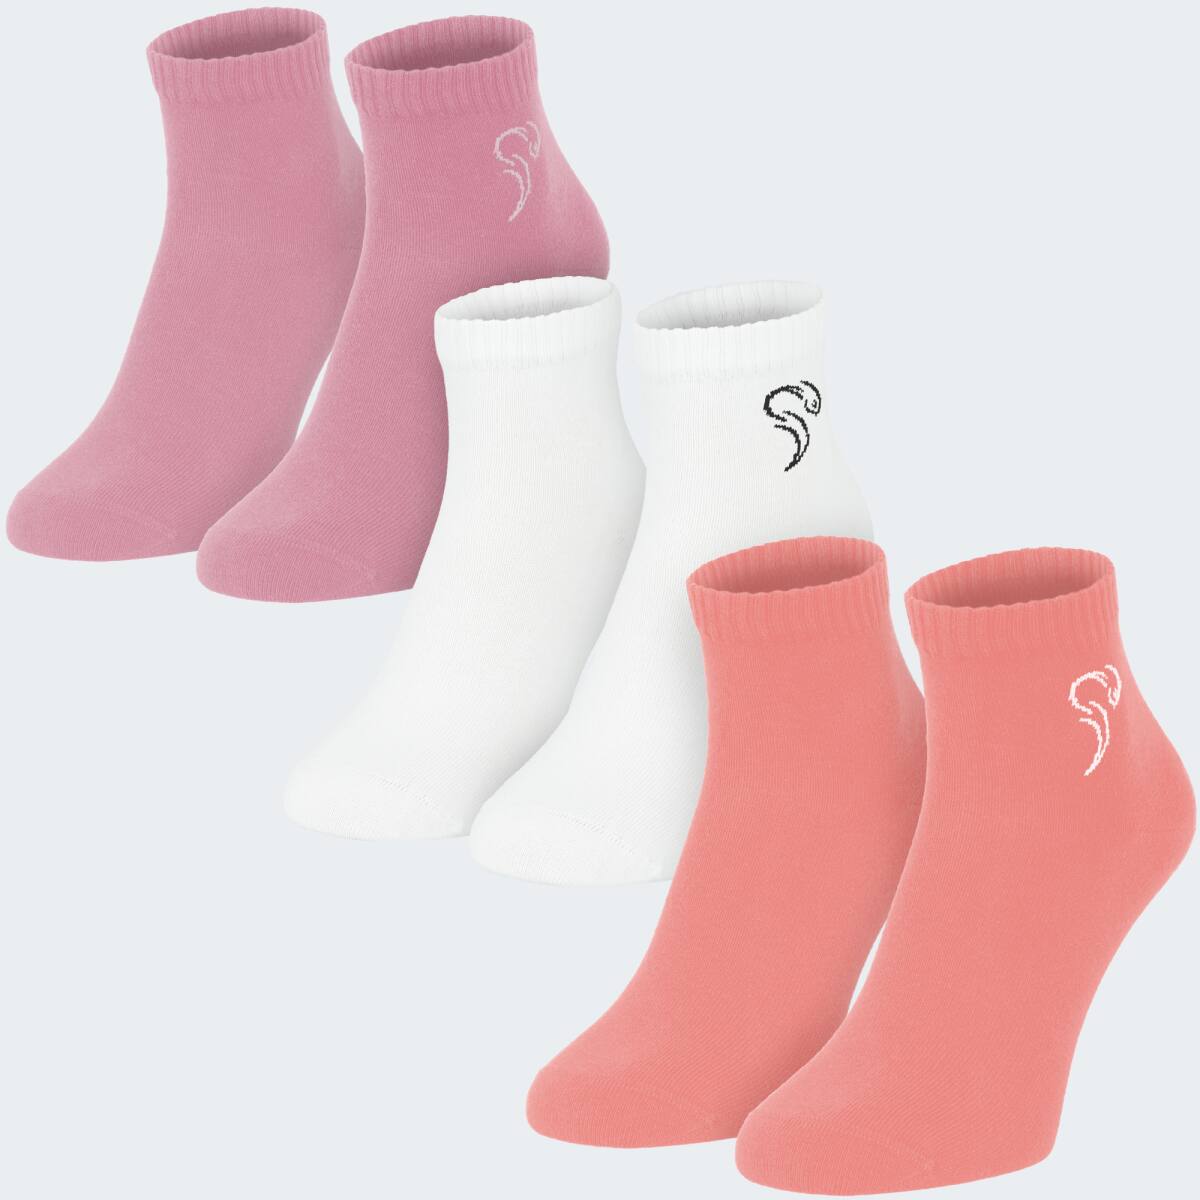 Basic Quarter Sneaker Socken 'pure comfort' 3 Paar - Weiß/Rosa/Apriko